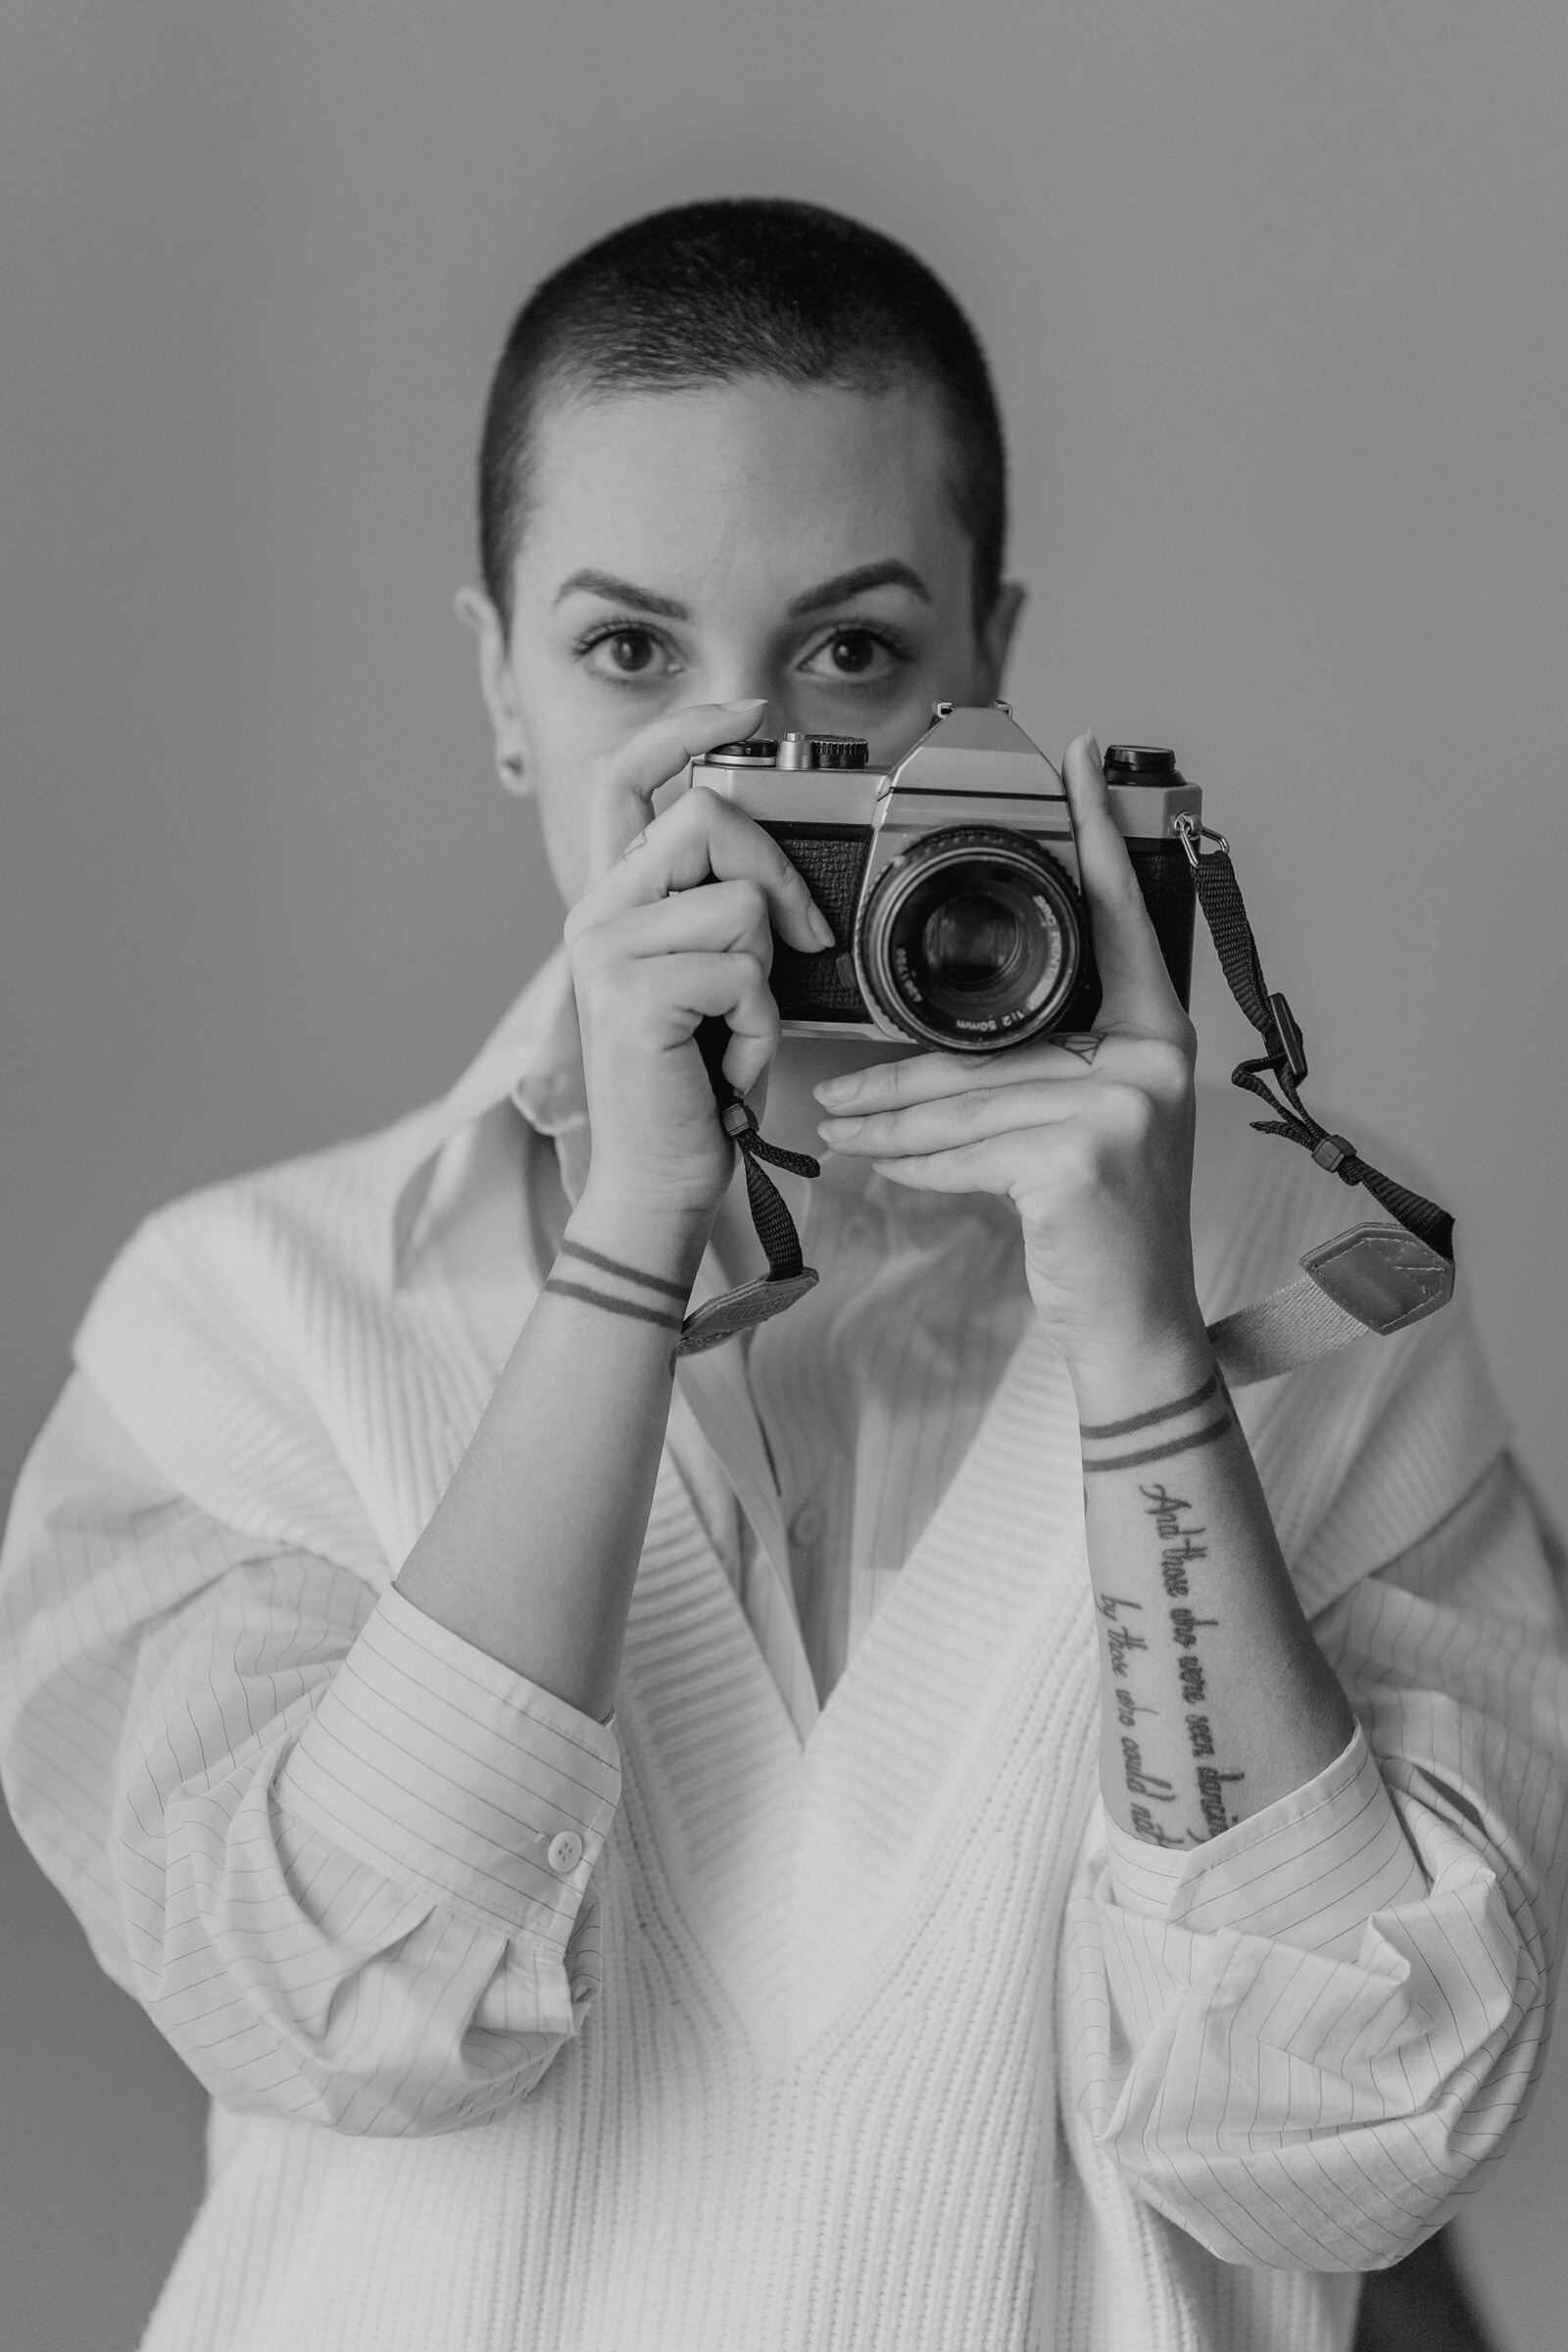 Female photographer with photo camera